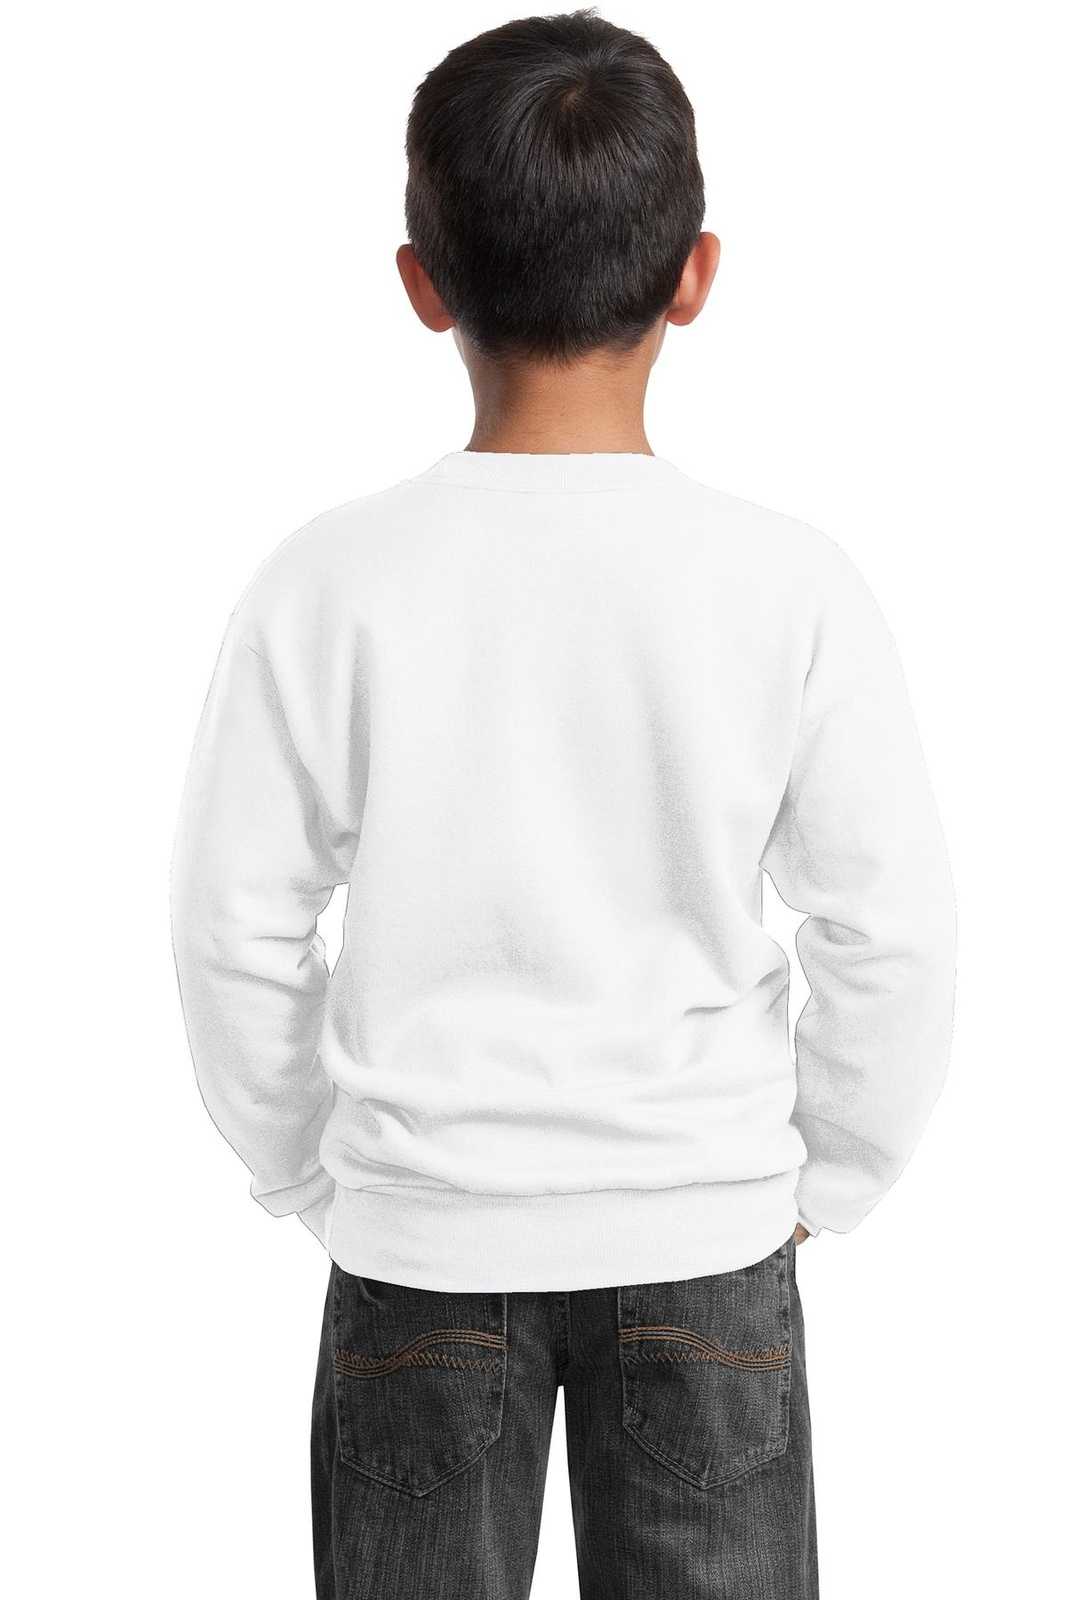 Port & Company PC90Y Youth Core Fleece Crewneck Sweatshirt - White - HIT a Double - 1